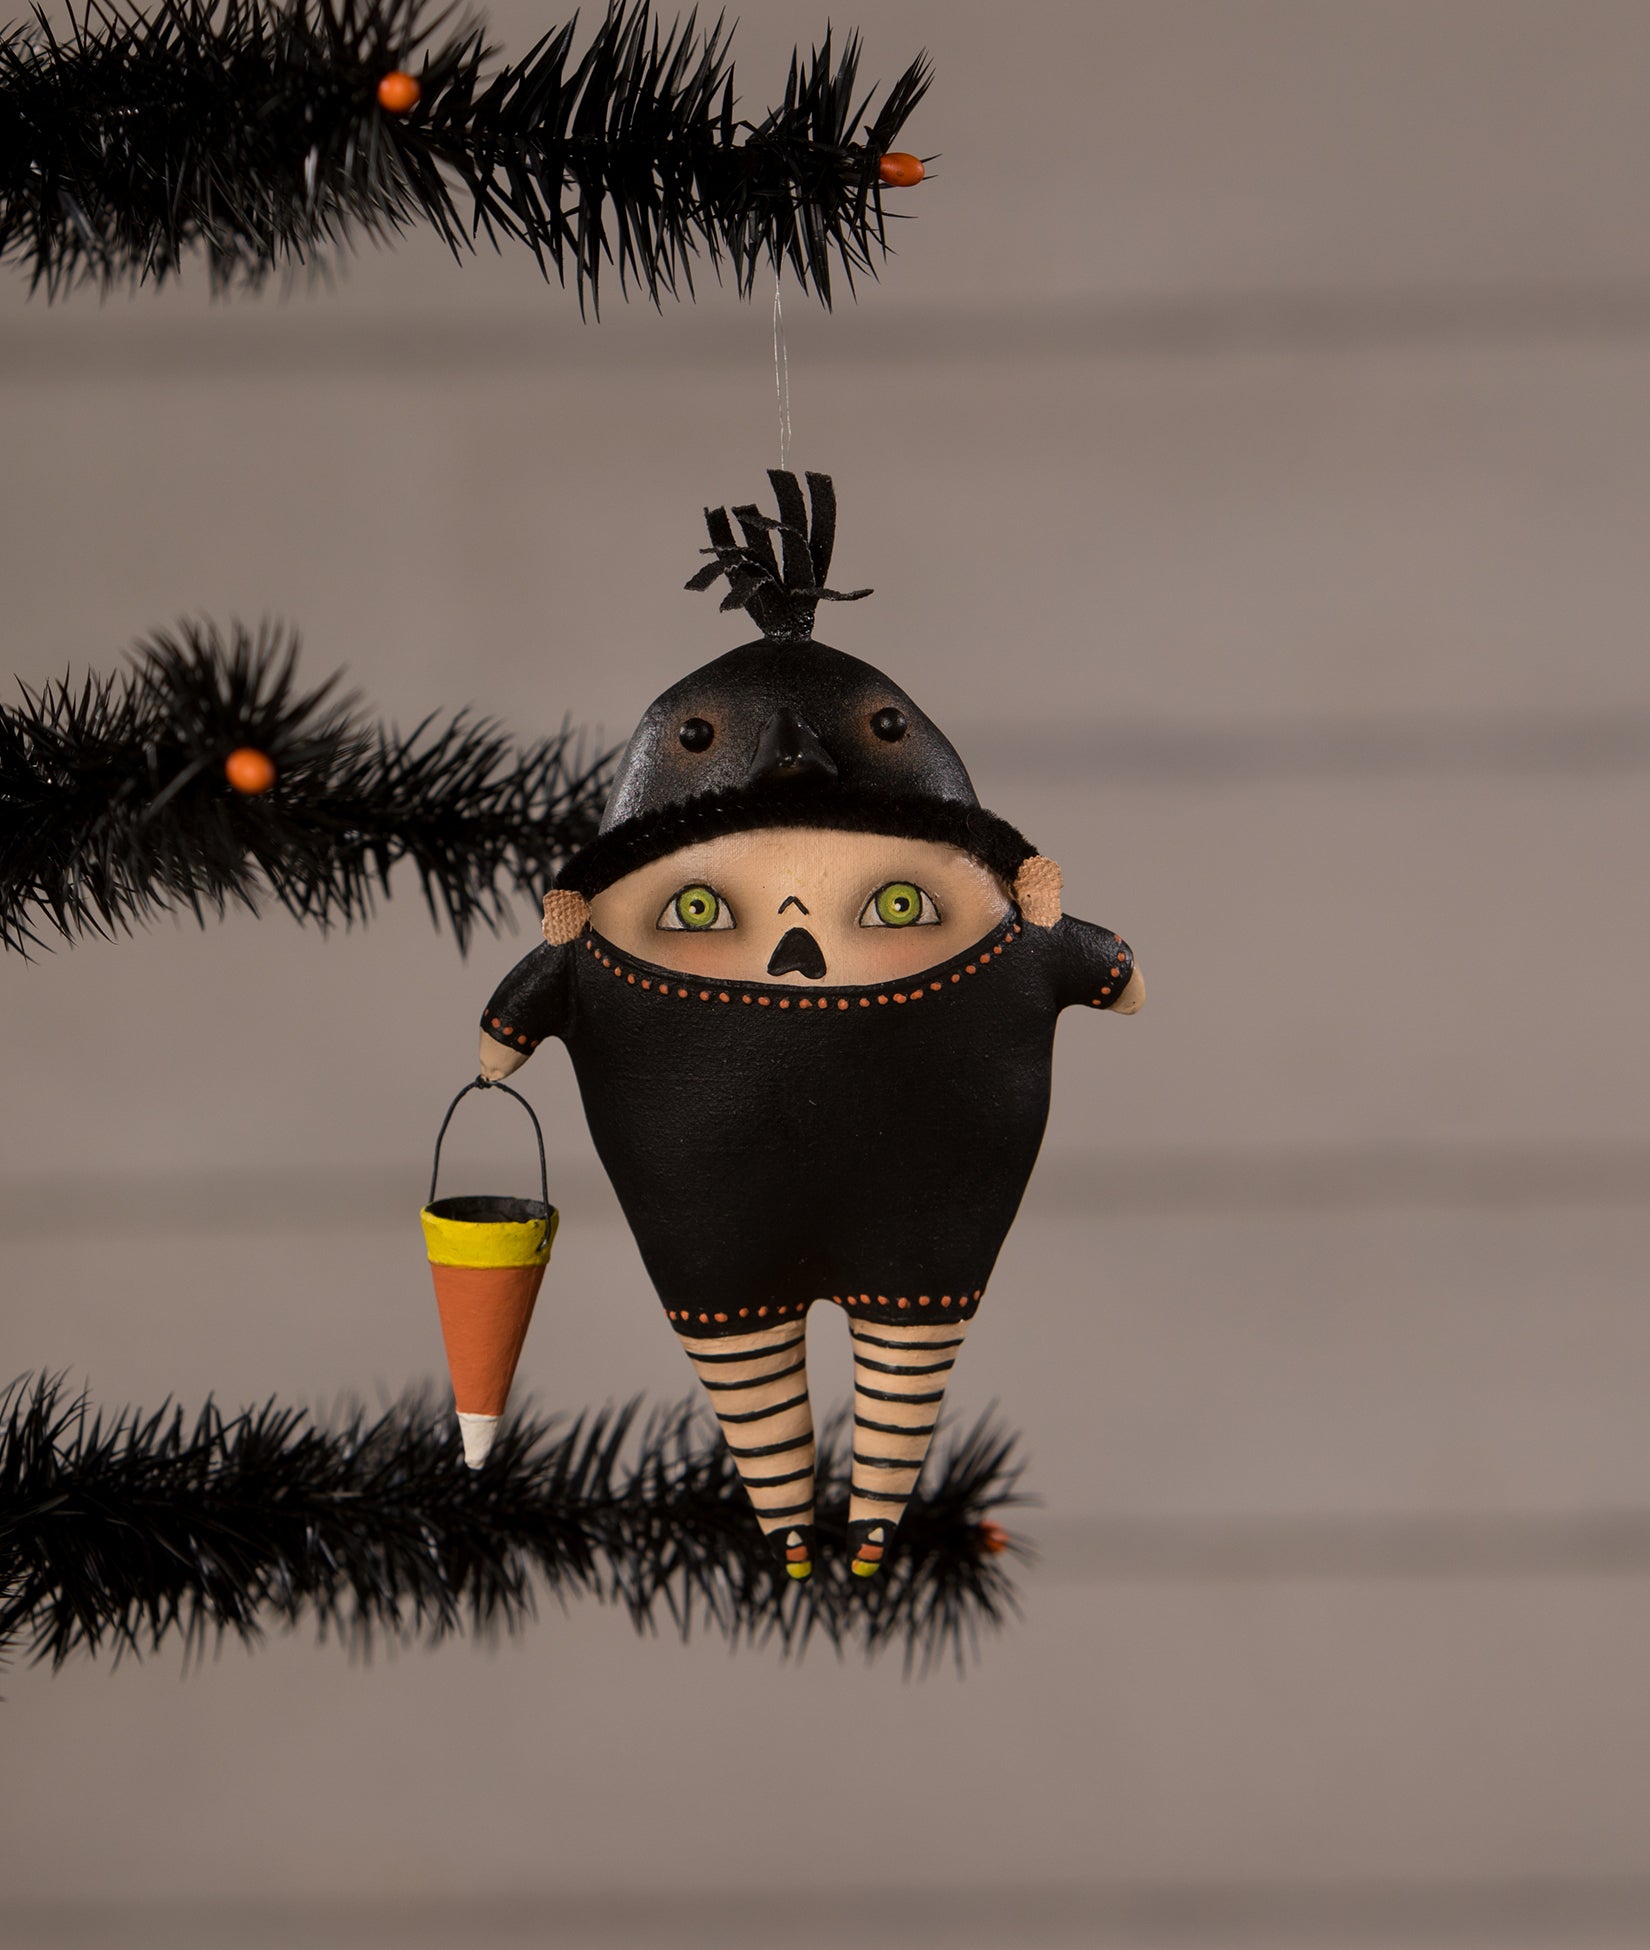 Bill Crow Ornament by Robin Seeber